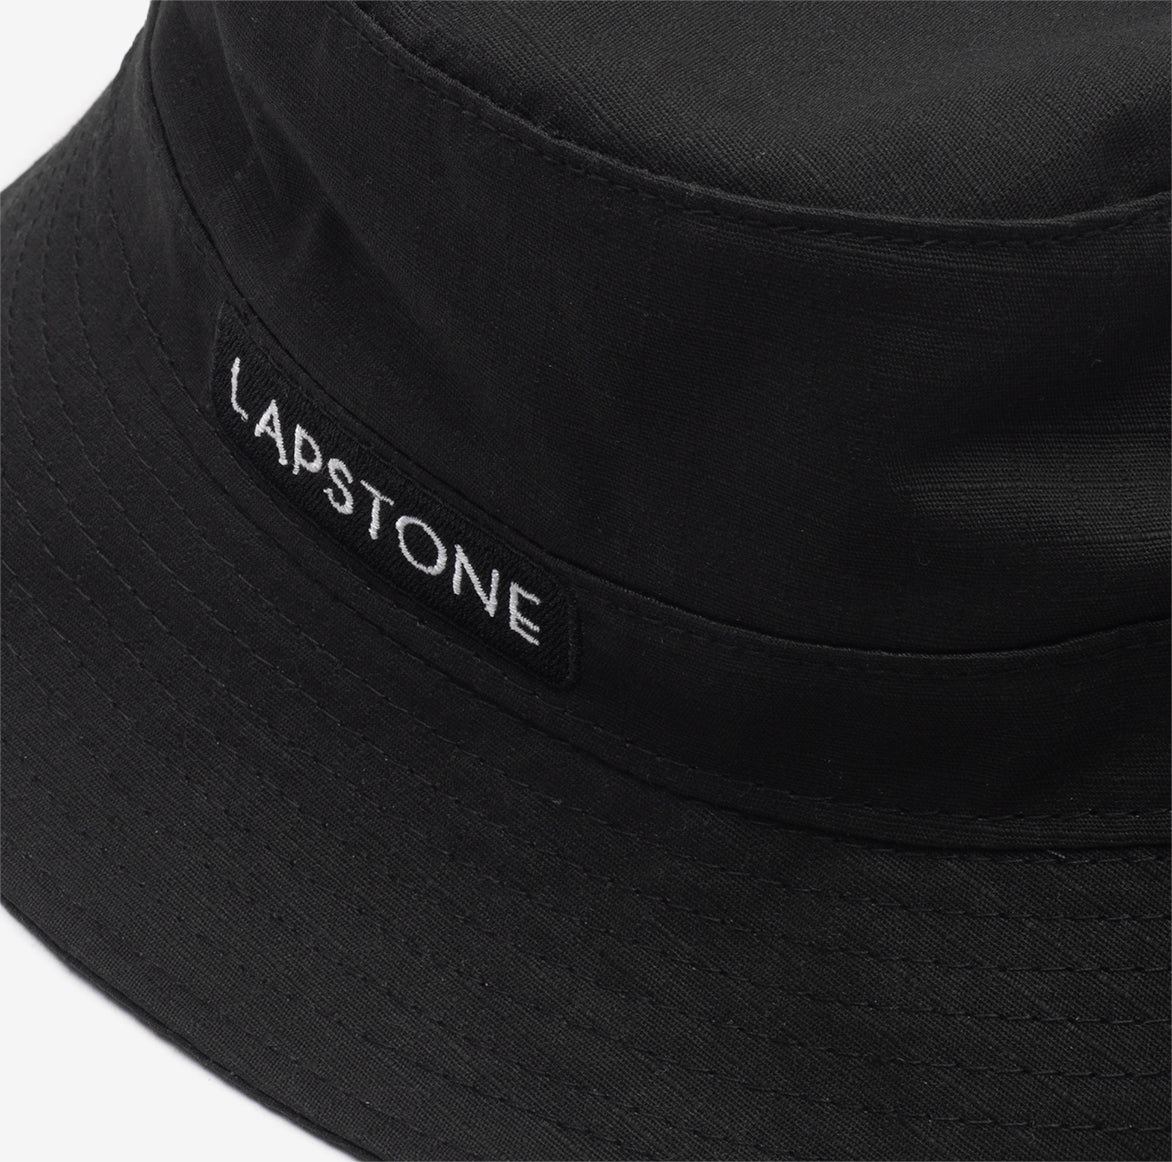 LAPSTONE SIGNATURE BUCKET HAT - BLACK